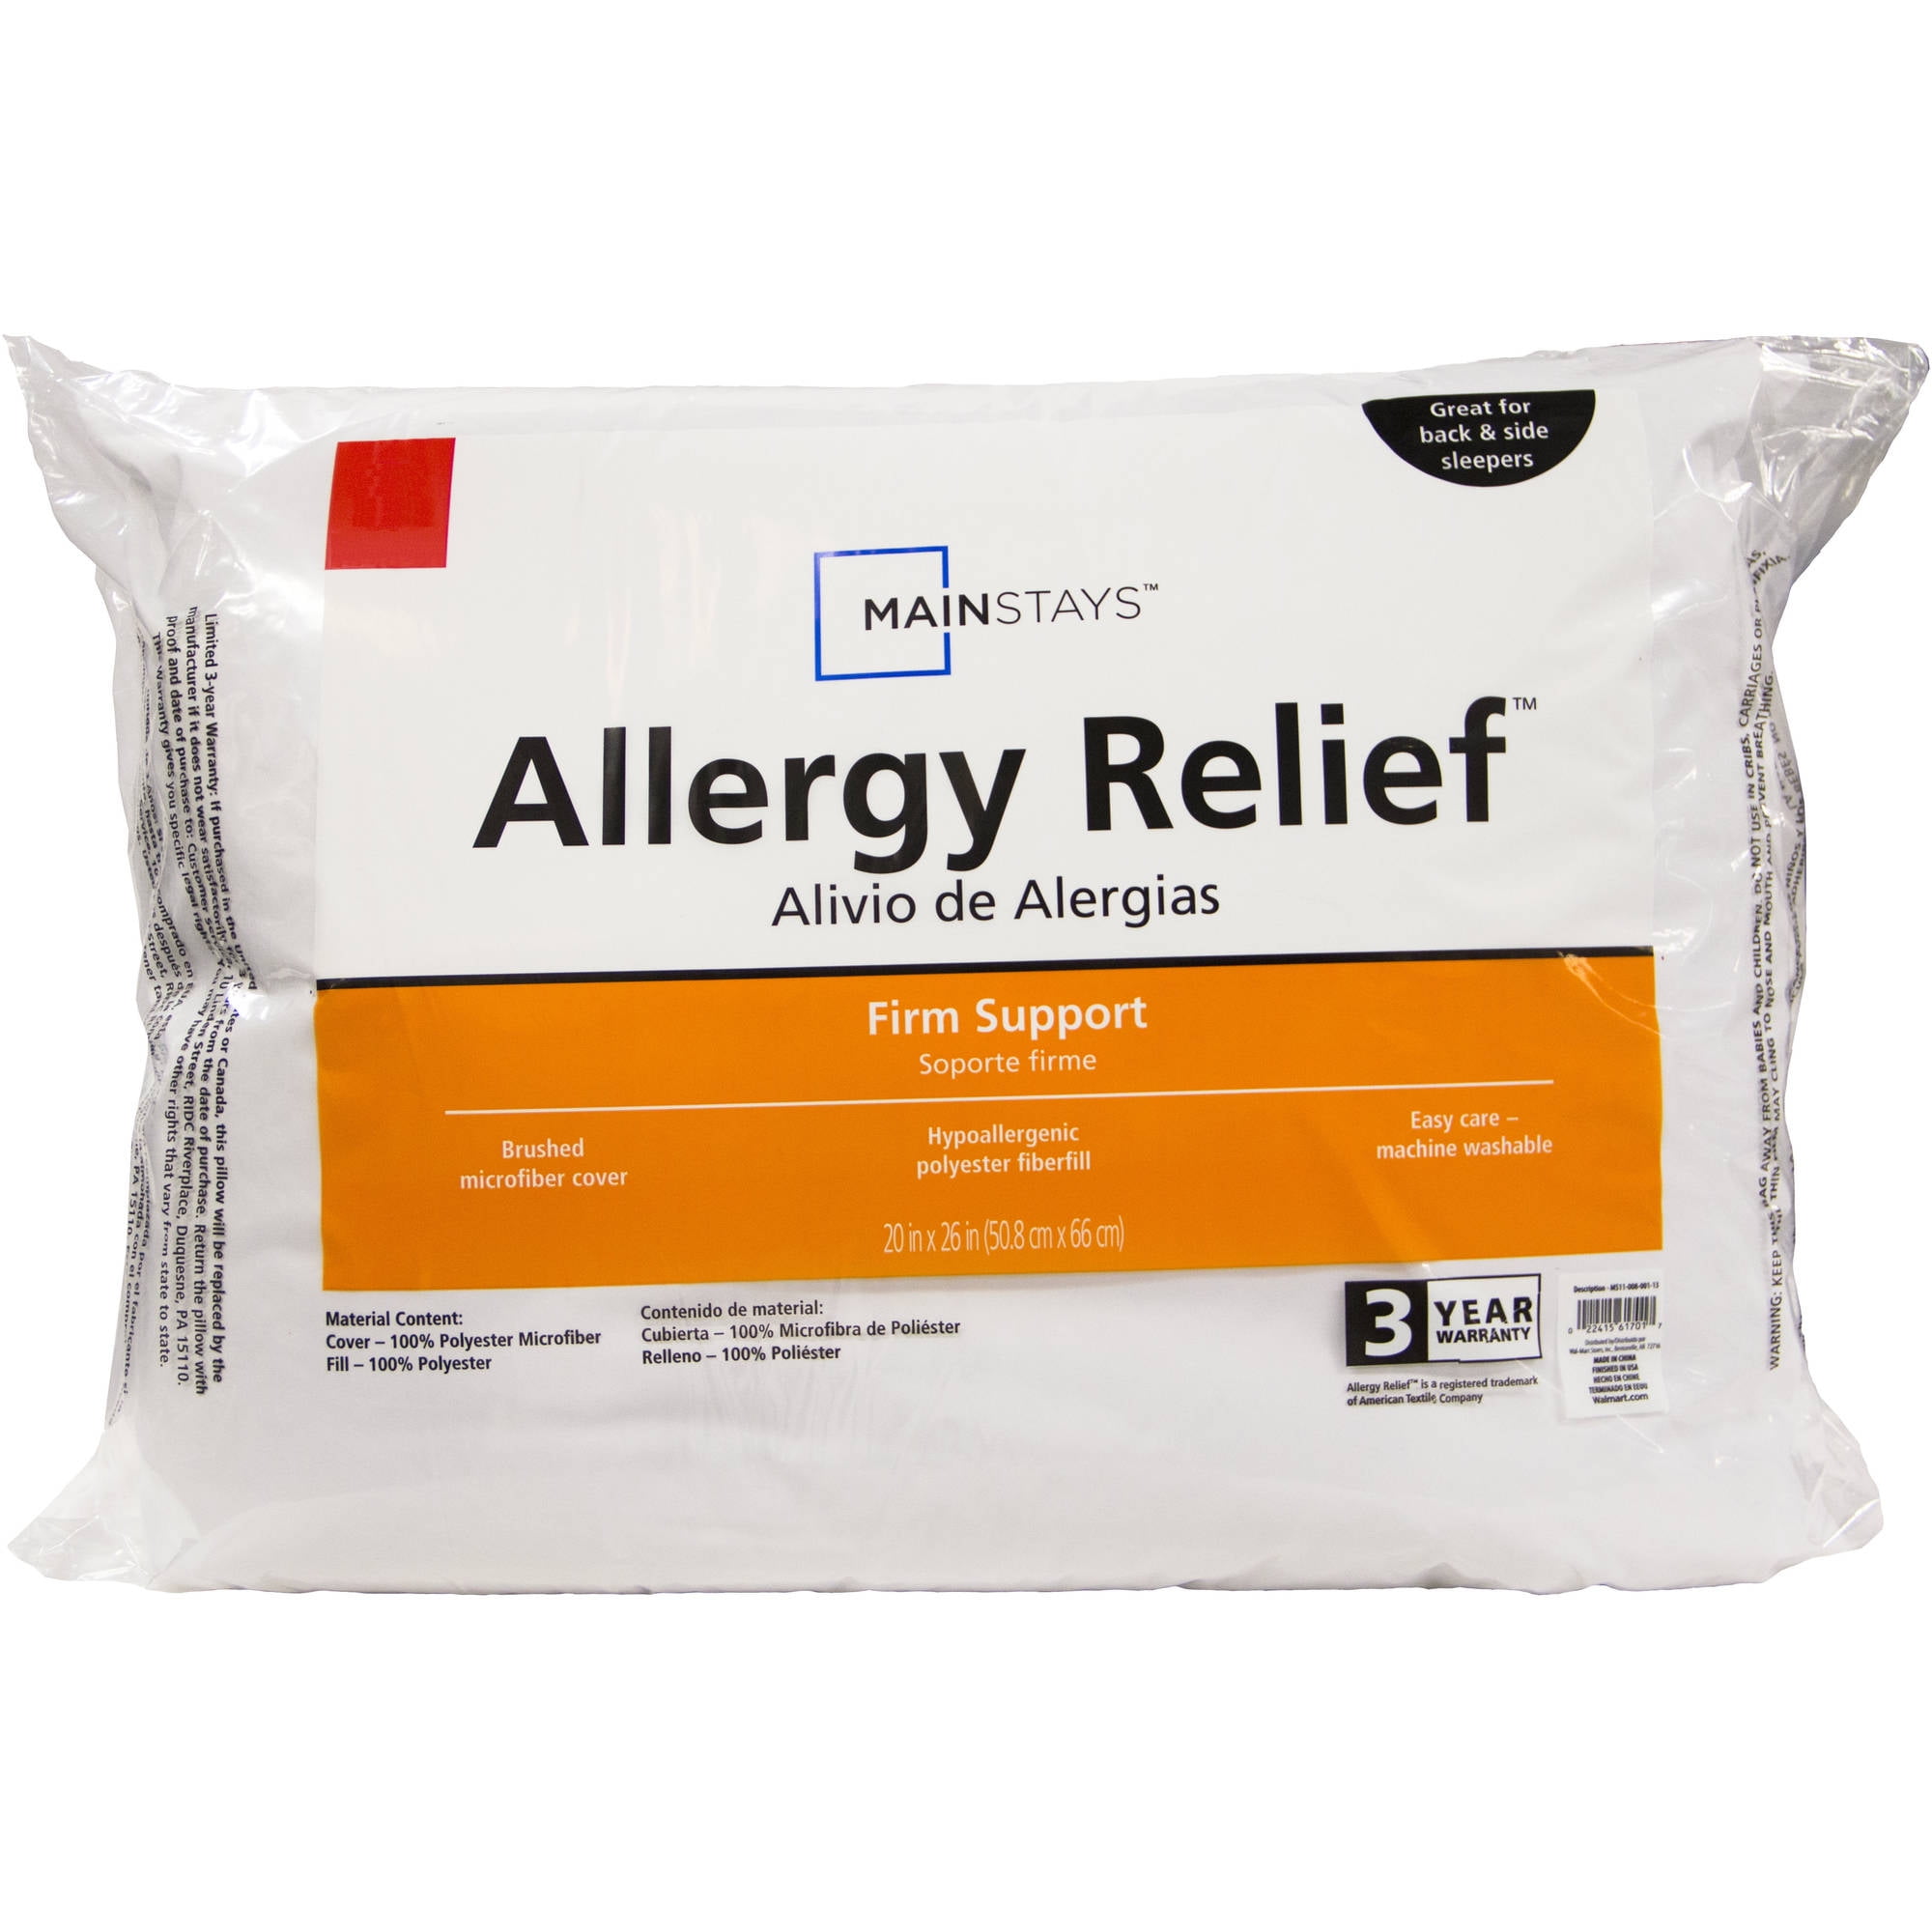 allergy pillows walmart